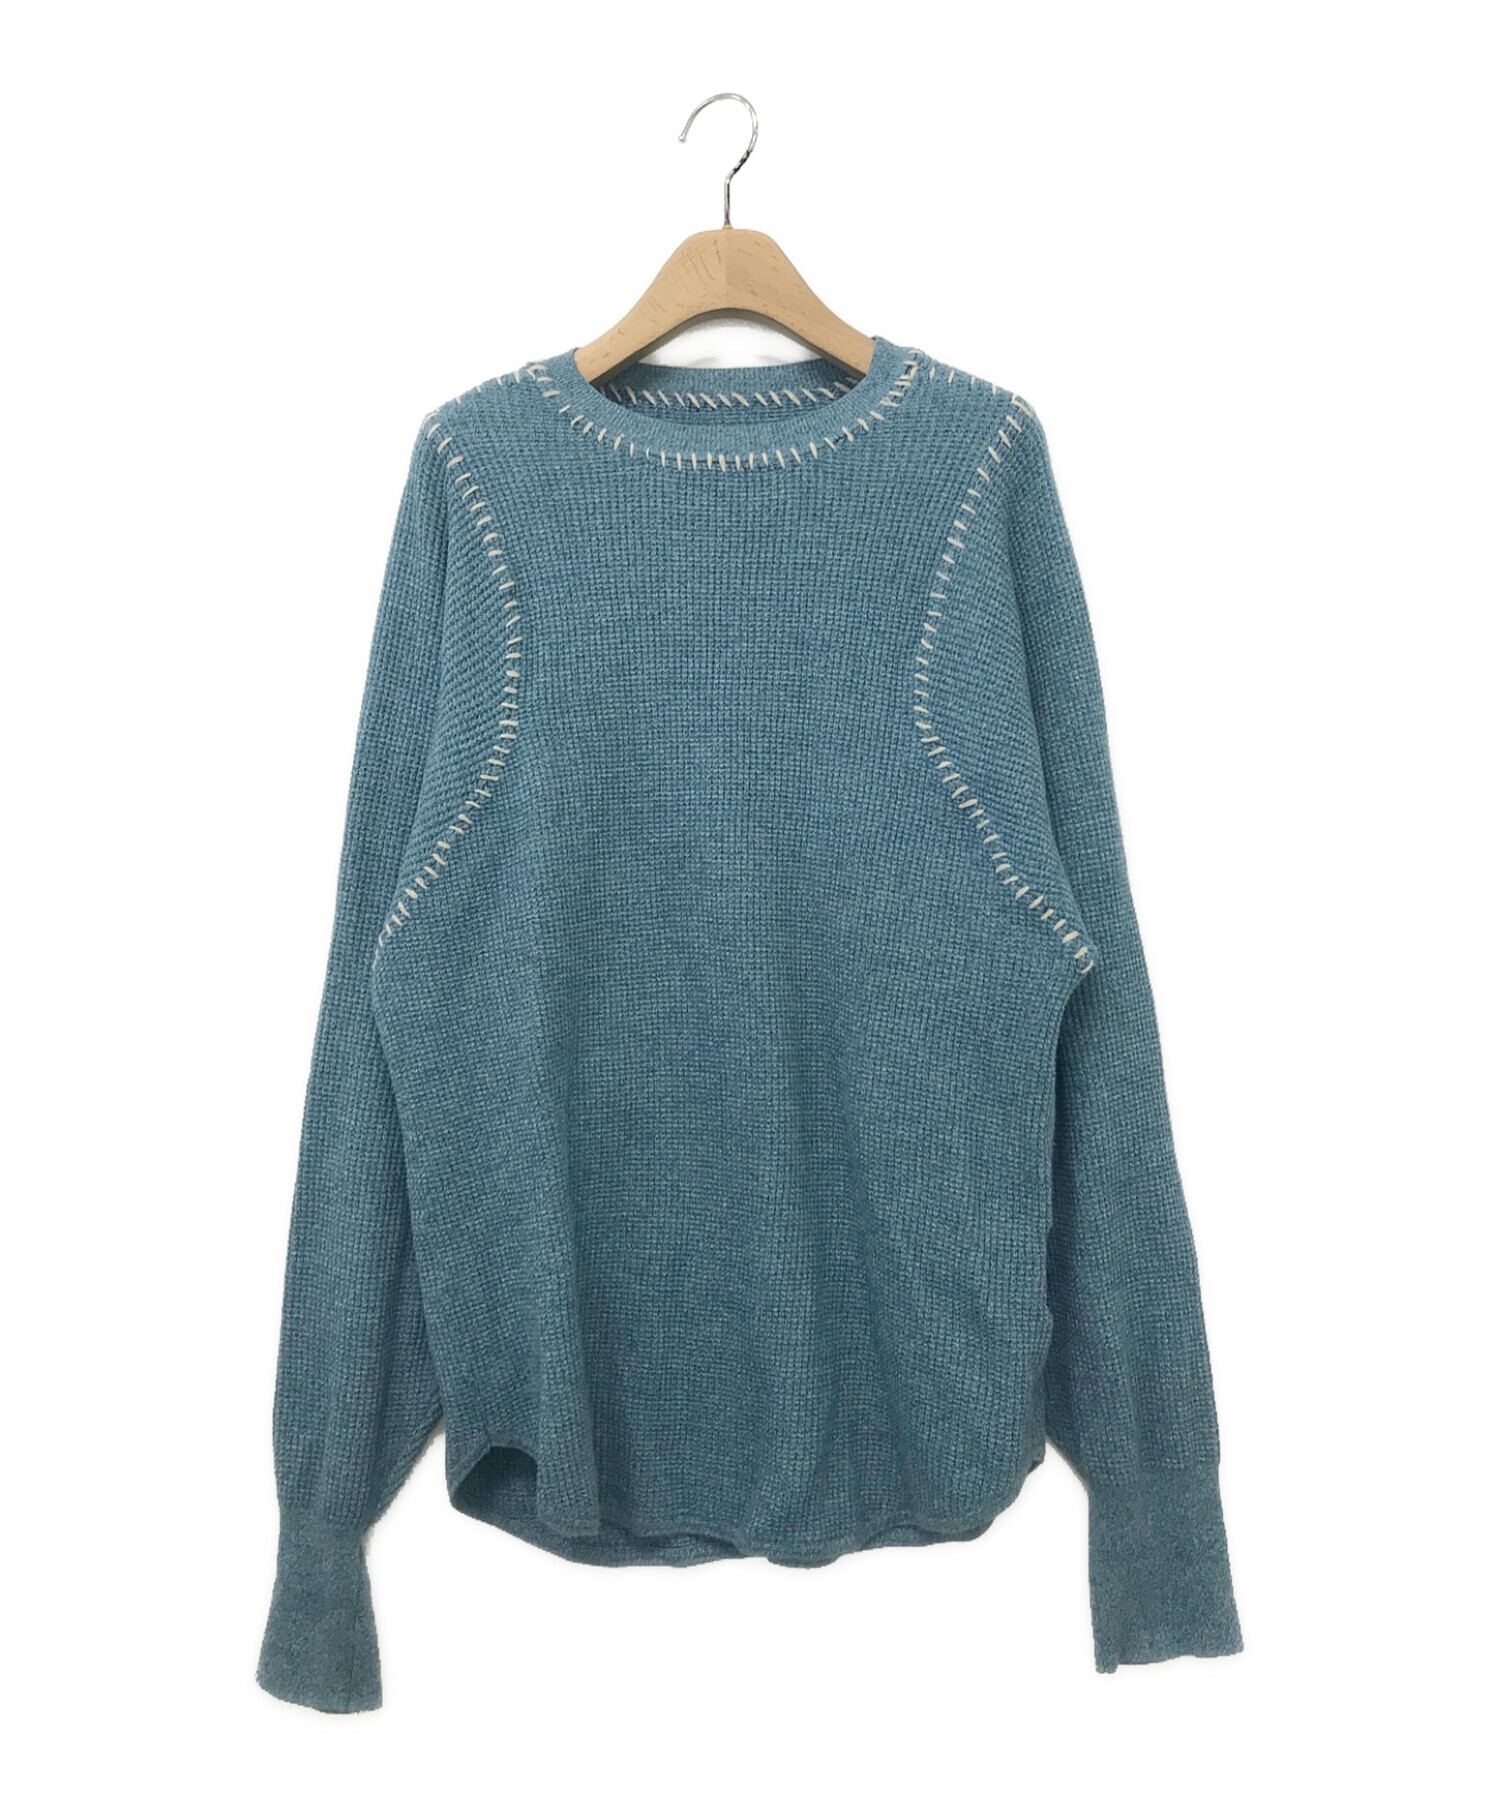 soduk (スドーク) thermal knit pullover